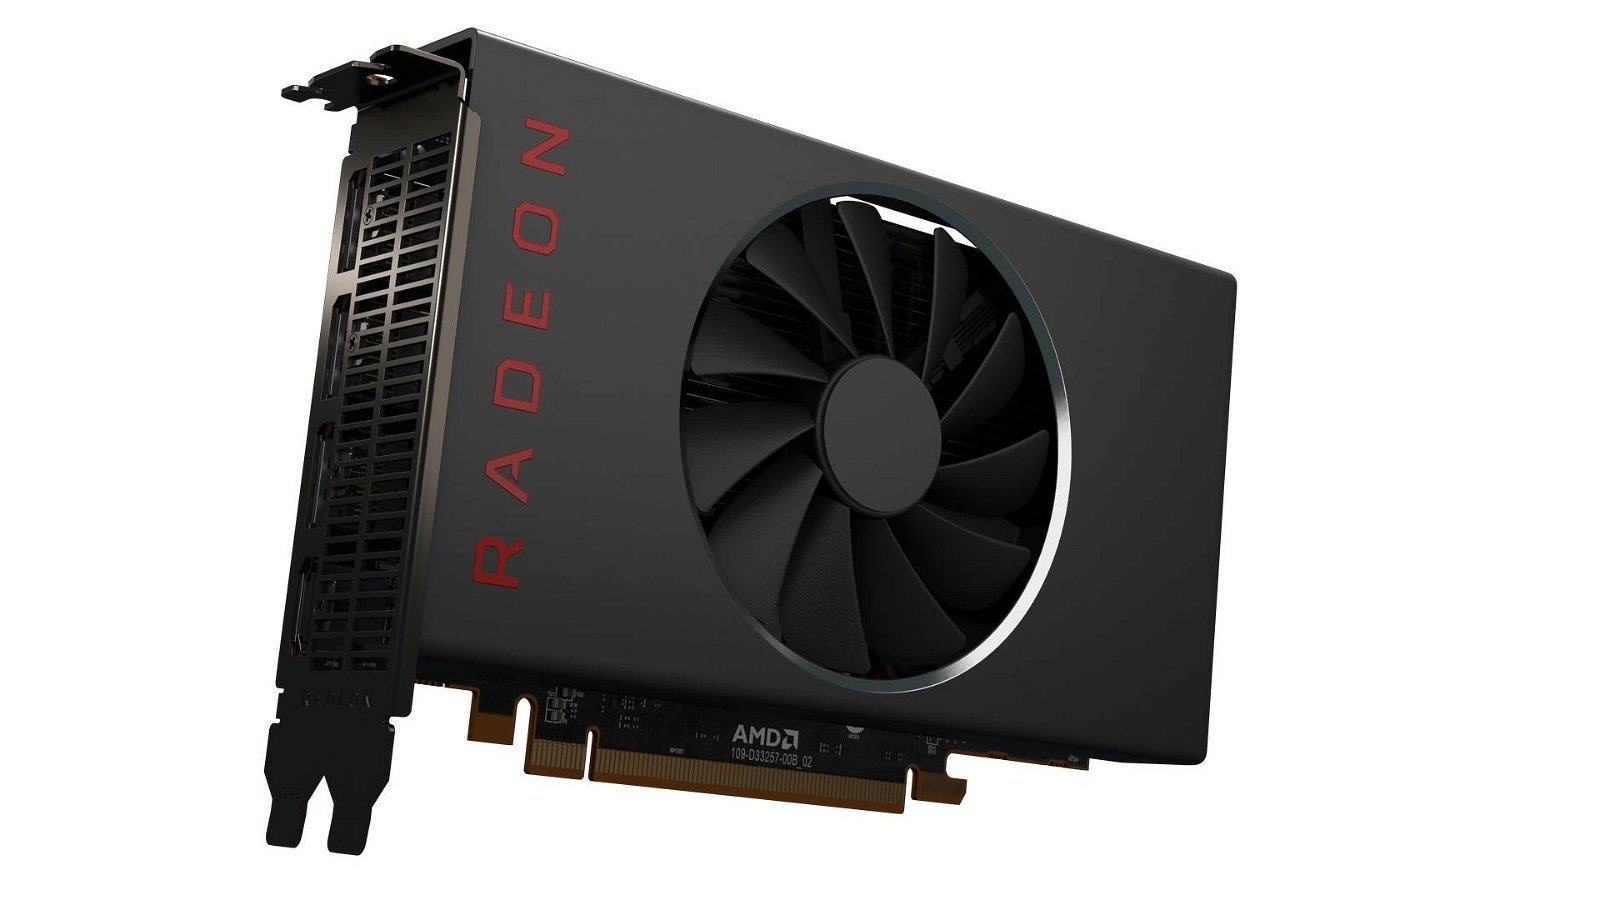 Immagine di Radeon RX 5500 e 5500M svelate: GPU Navi per giocare in Full HD su PC desktop e portatili